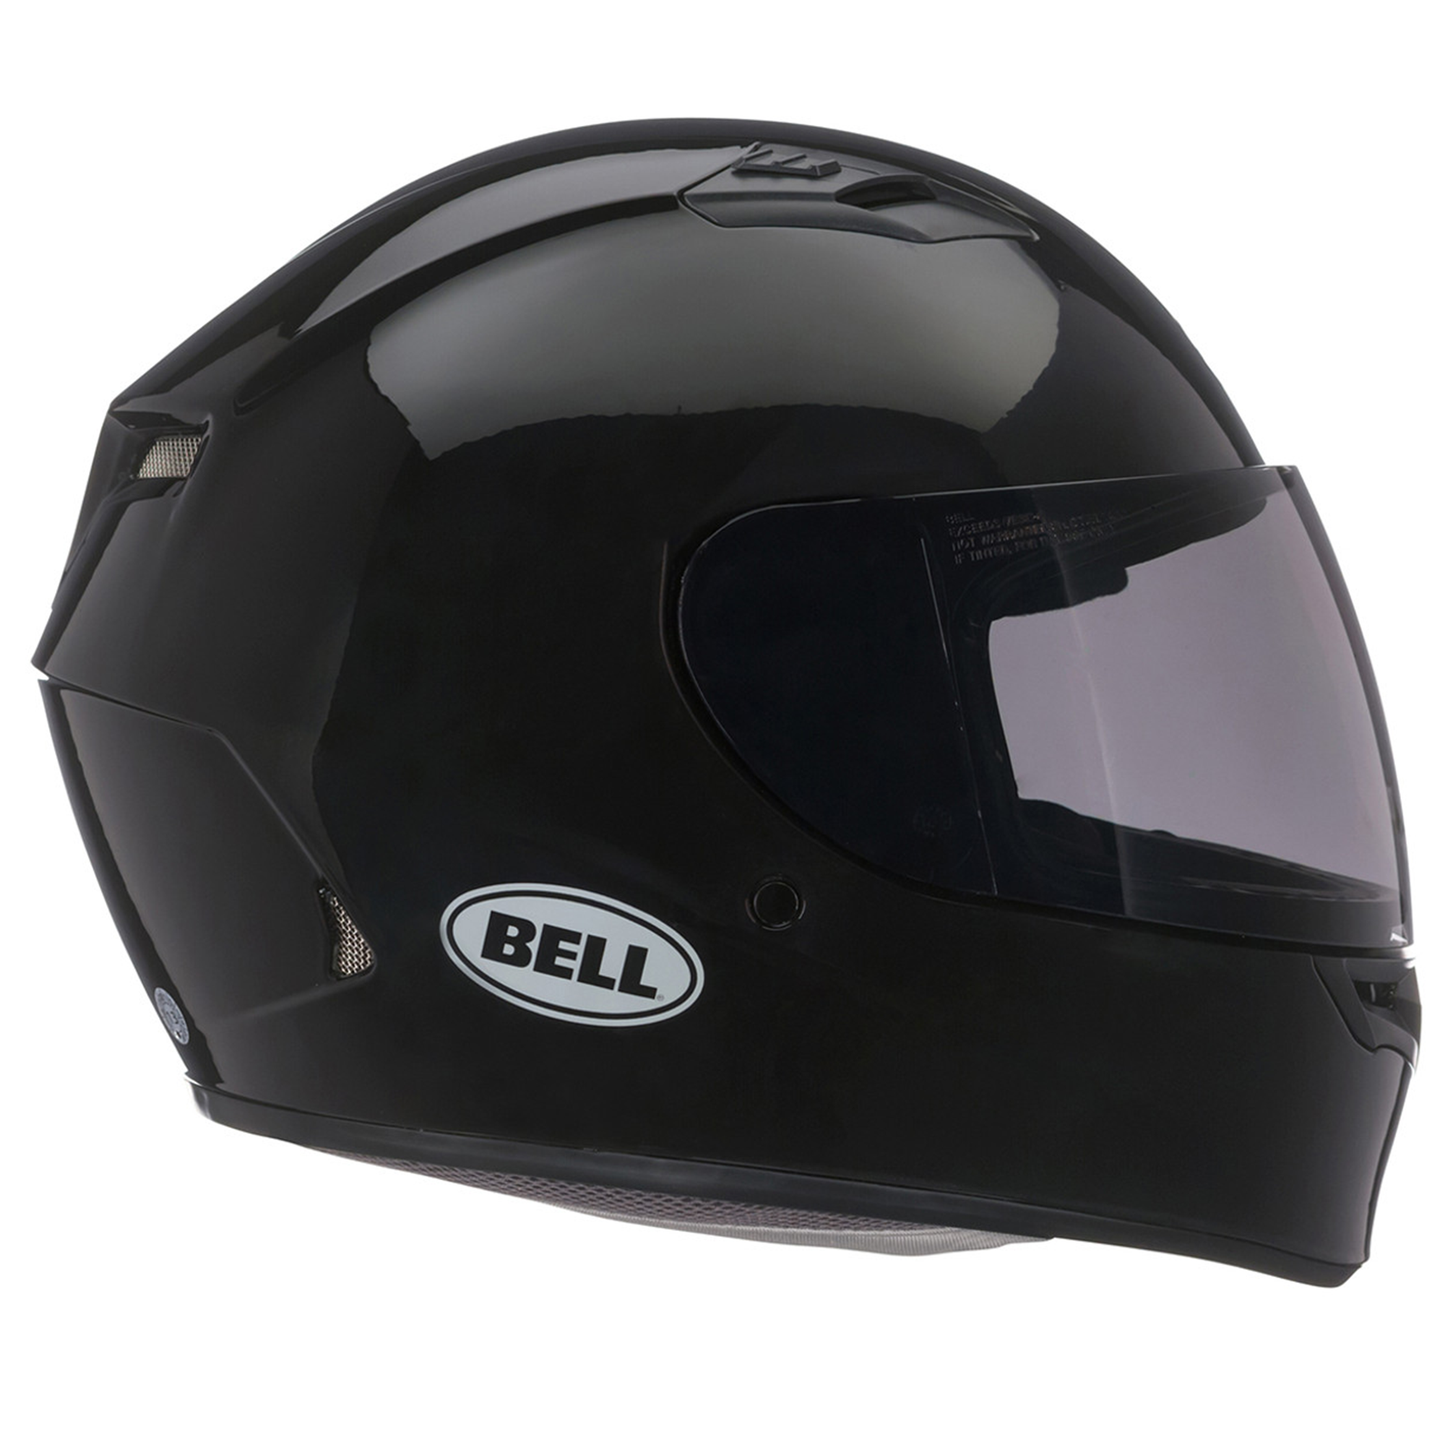 Bell Qualifier - Solid Black - Free Dark Visor